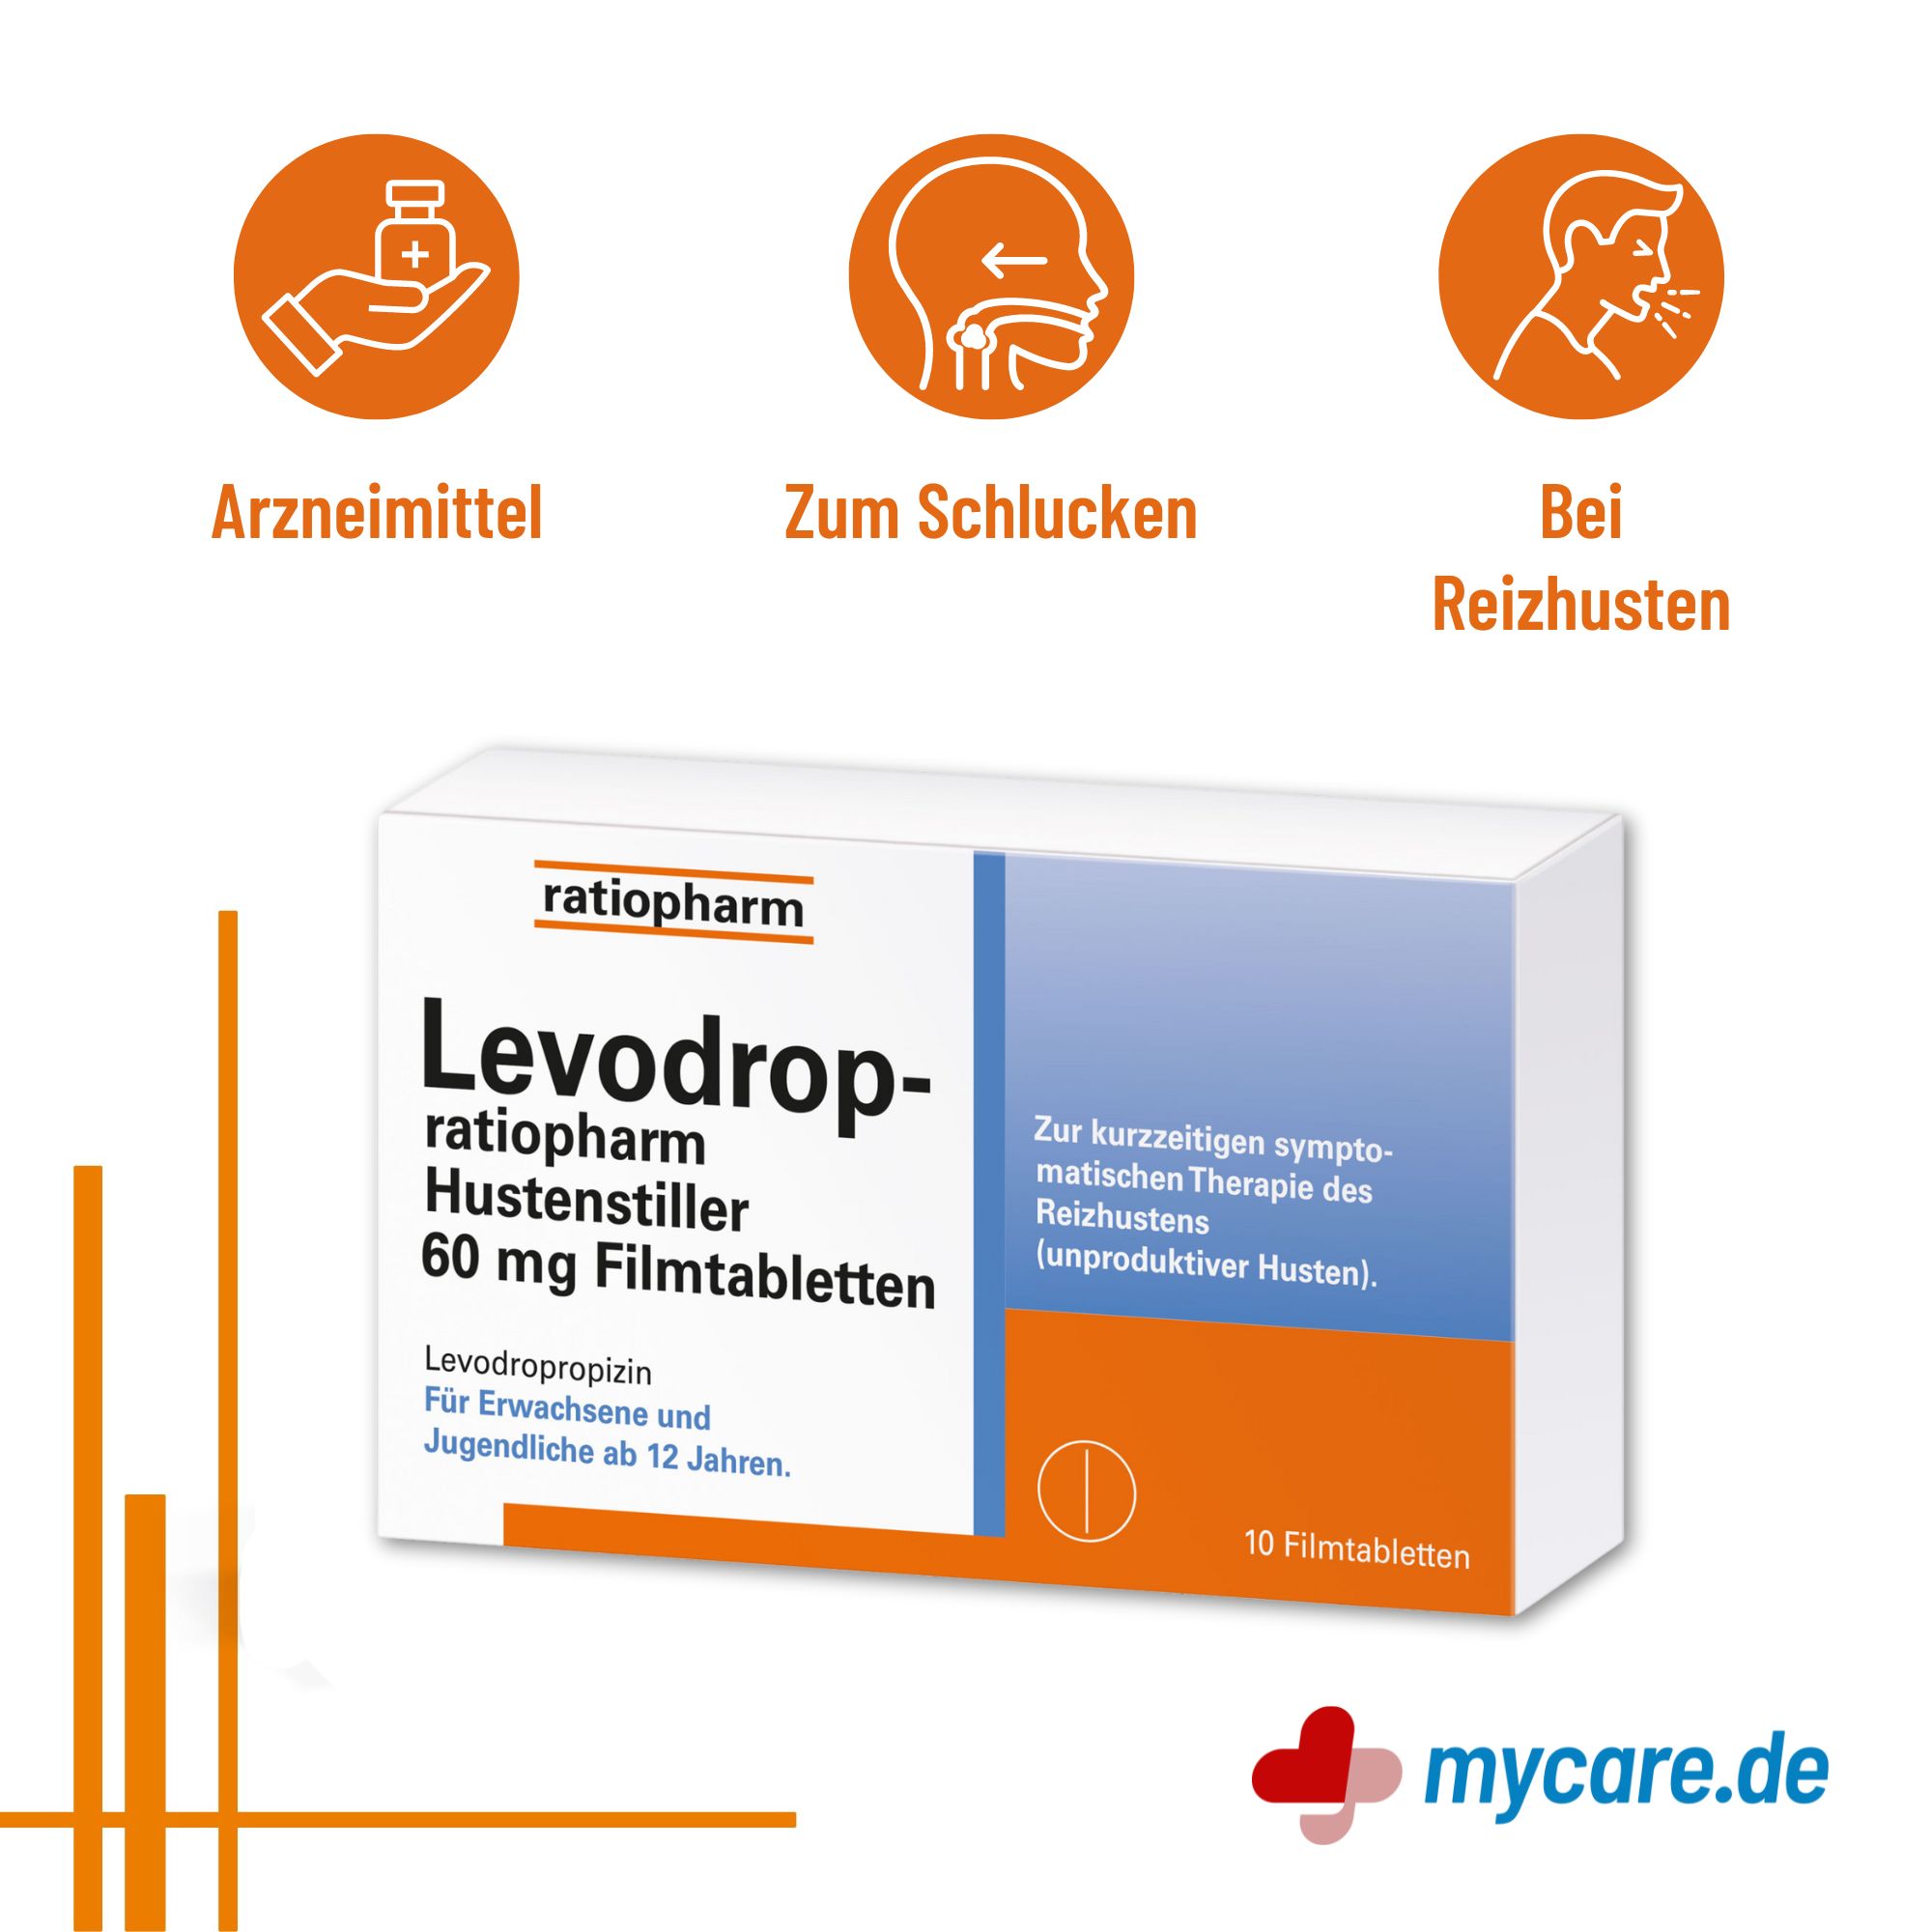 Infografik Levodrop-ratiopharm Hustenstiller 60 mg Filmtabletten Vorteile